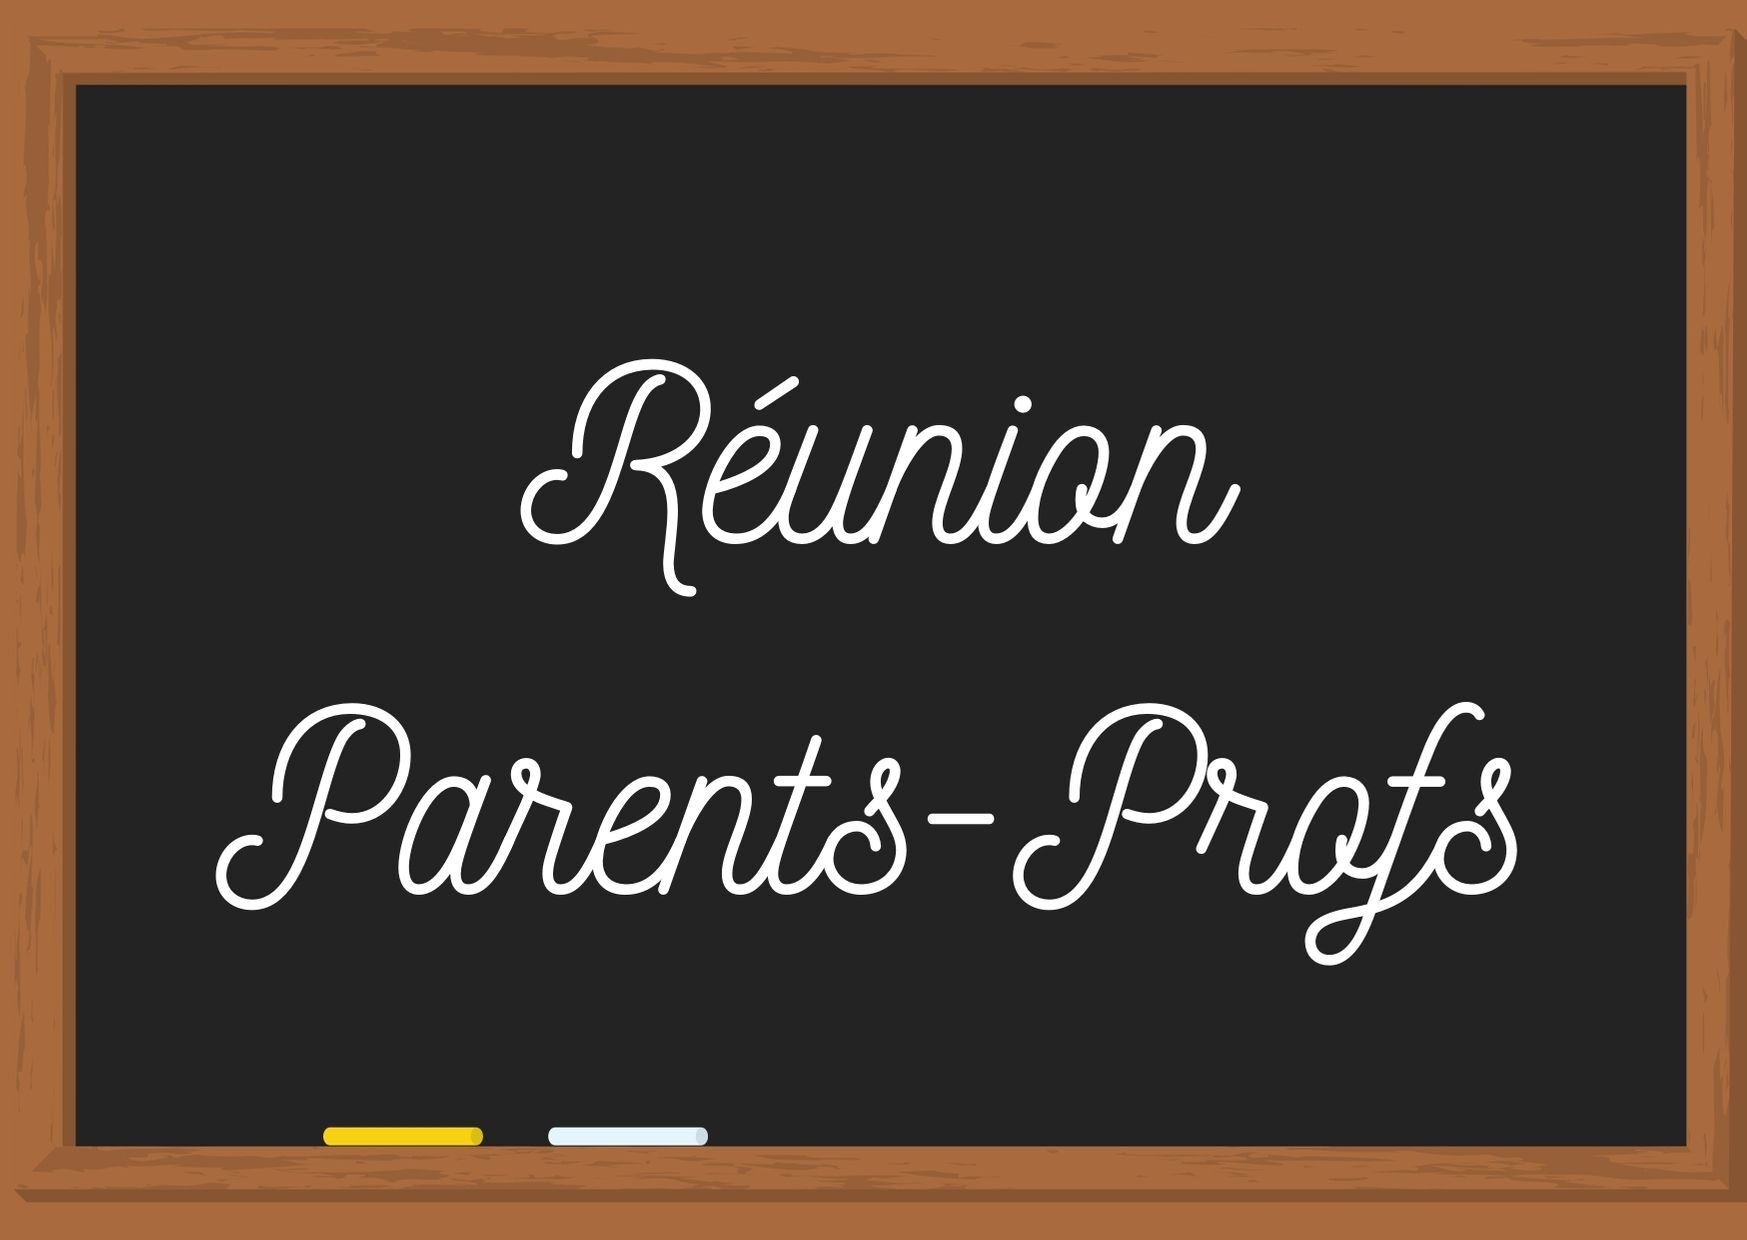 Reunion-parents-profs.jpg